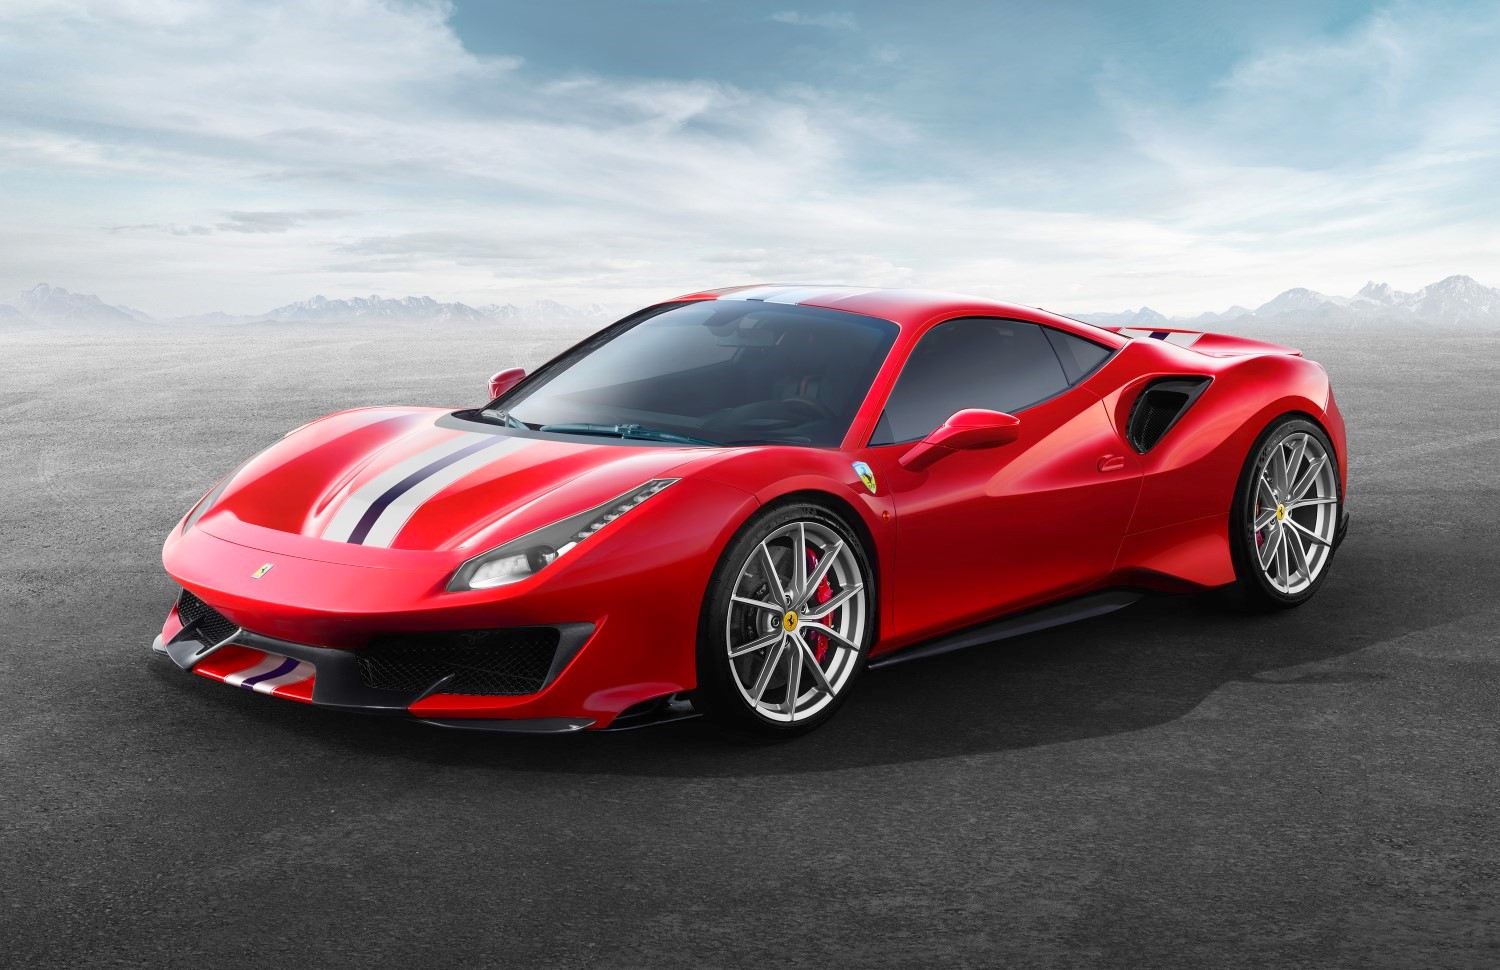 The average profit on every Ferrari is $80,000